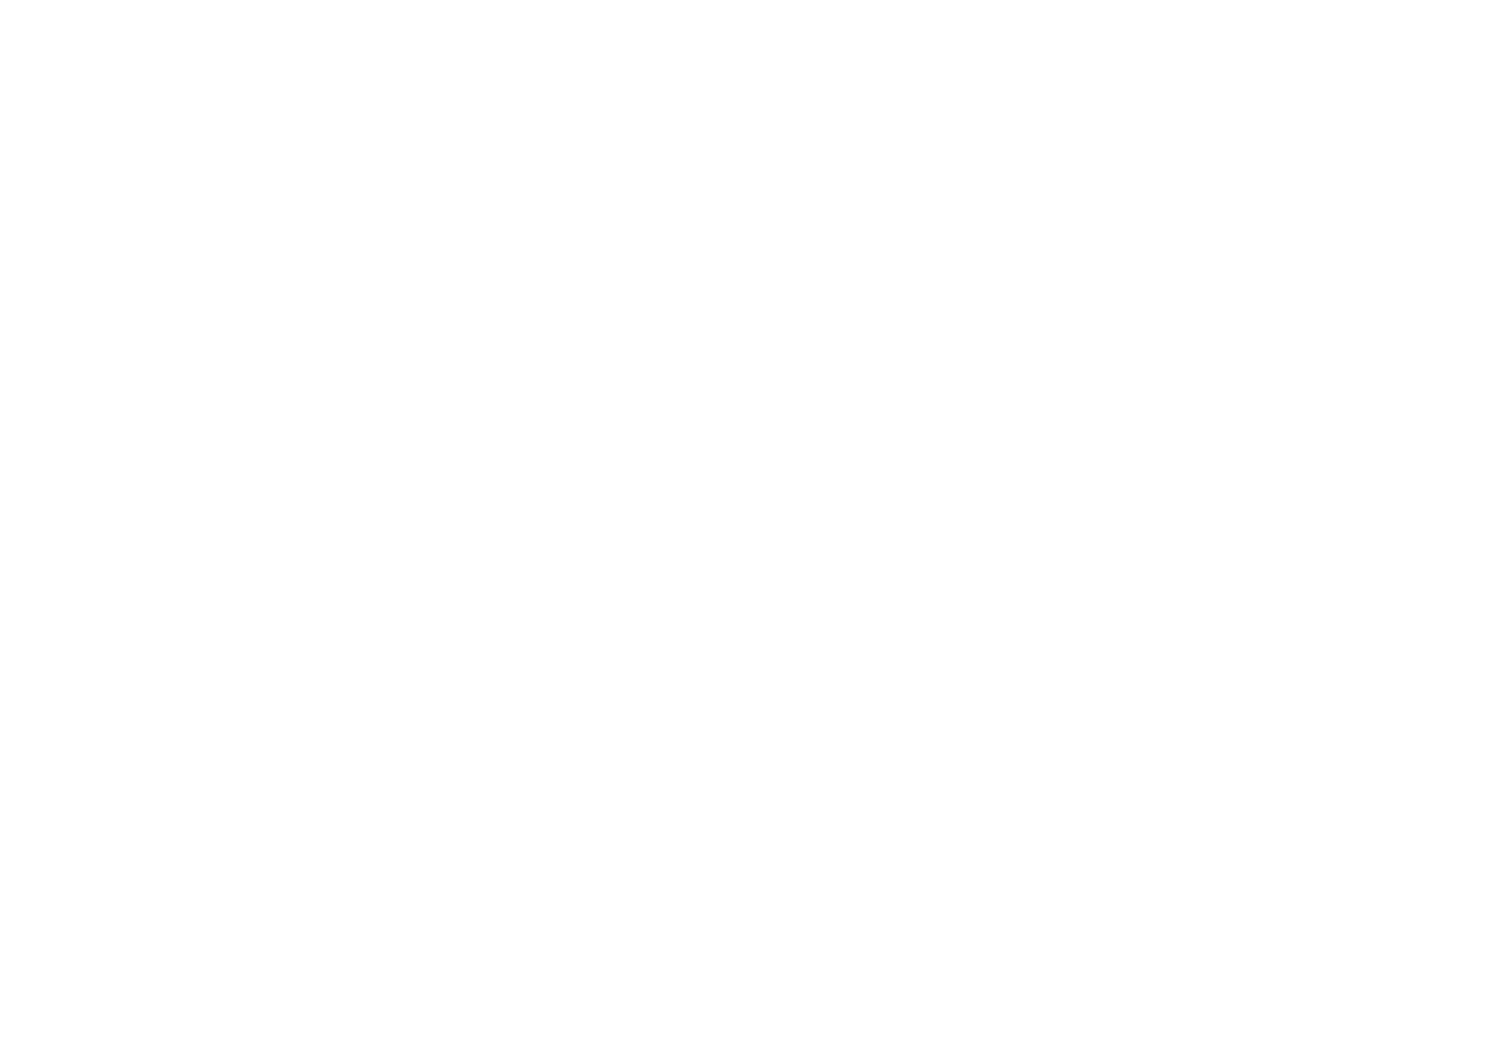 Accounting Innovators